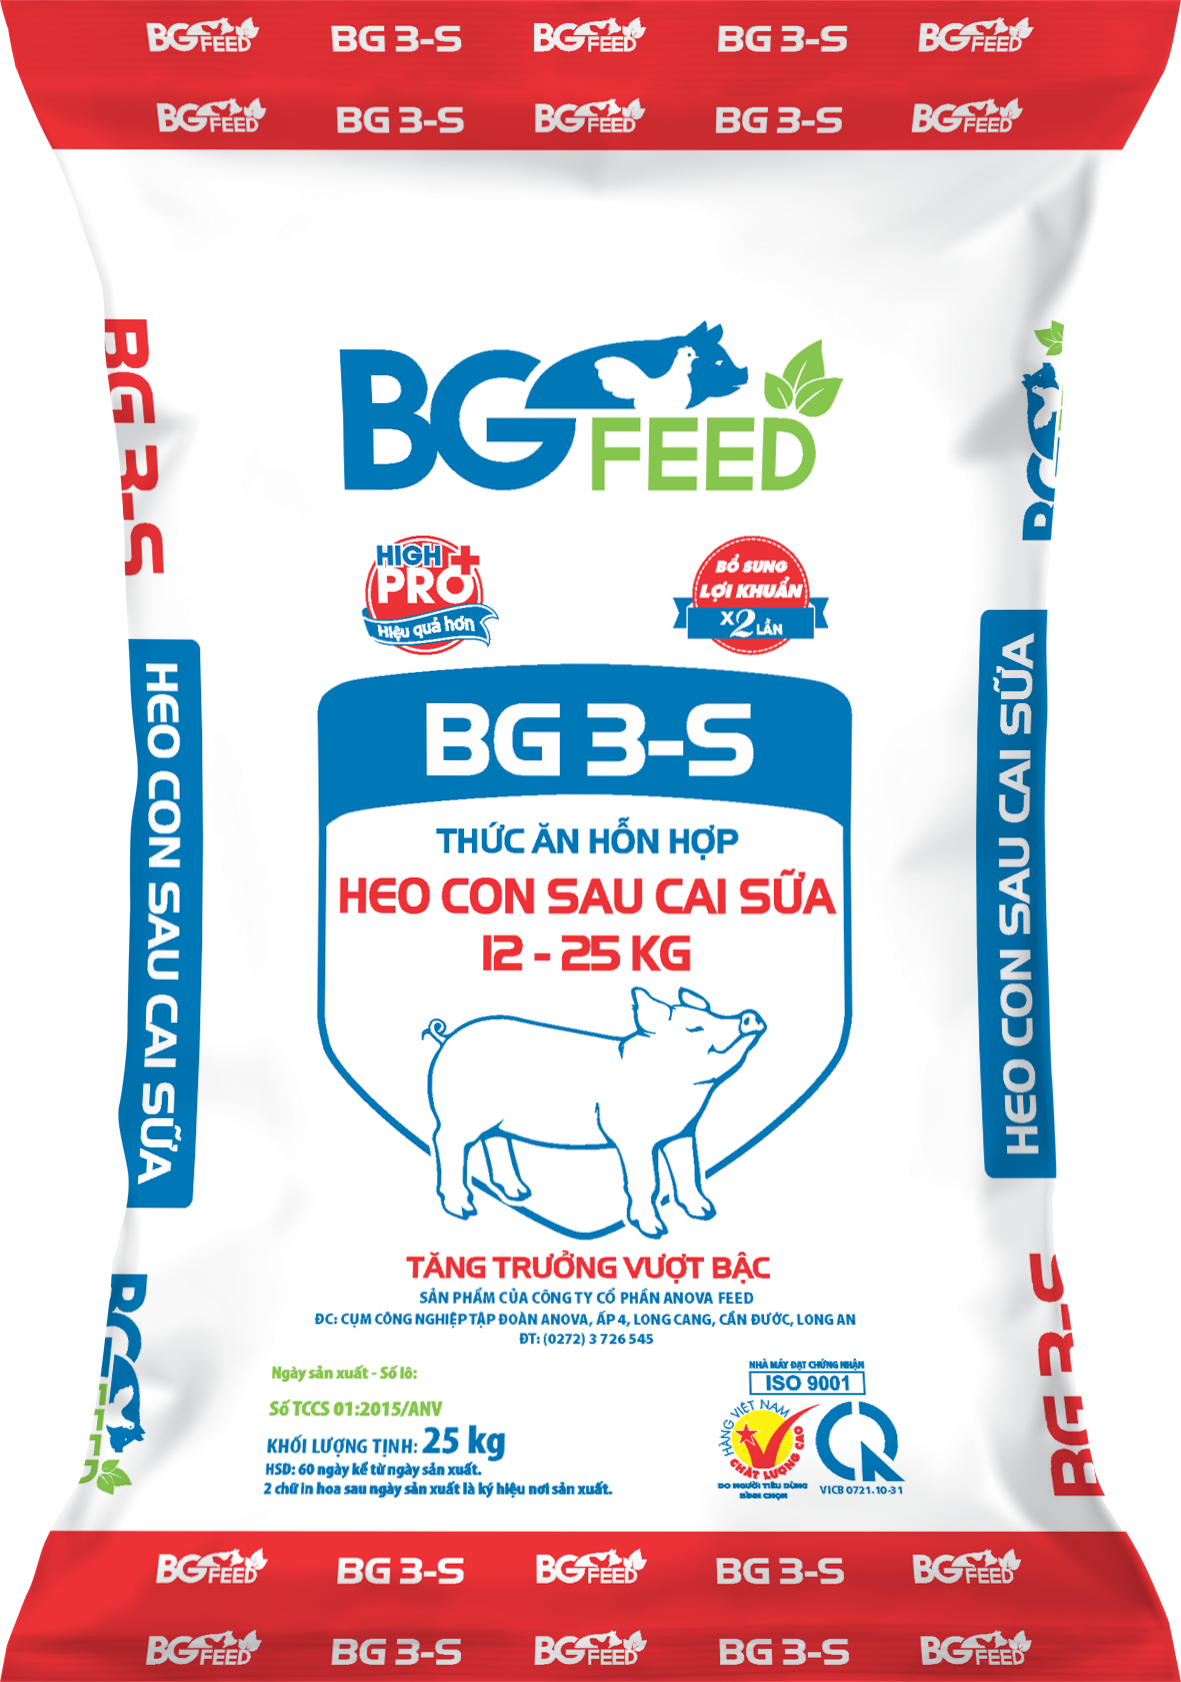 Thức ăn hỗn hợp heo con sau cai sữa 12 - 25kg BG 3-S